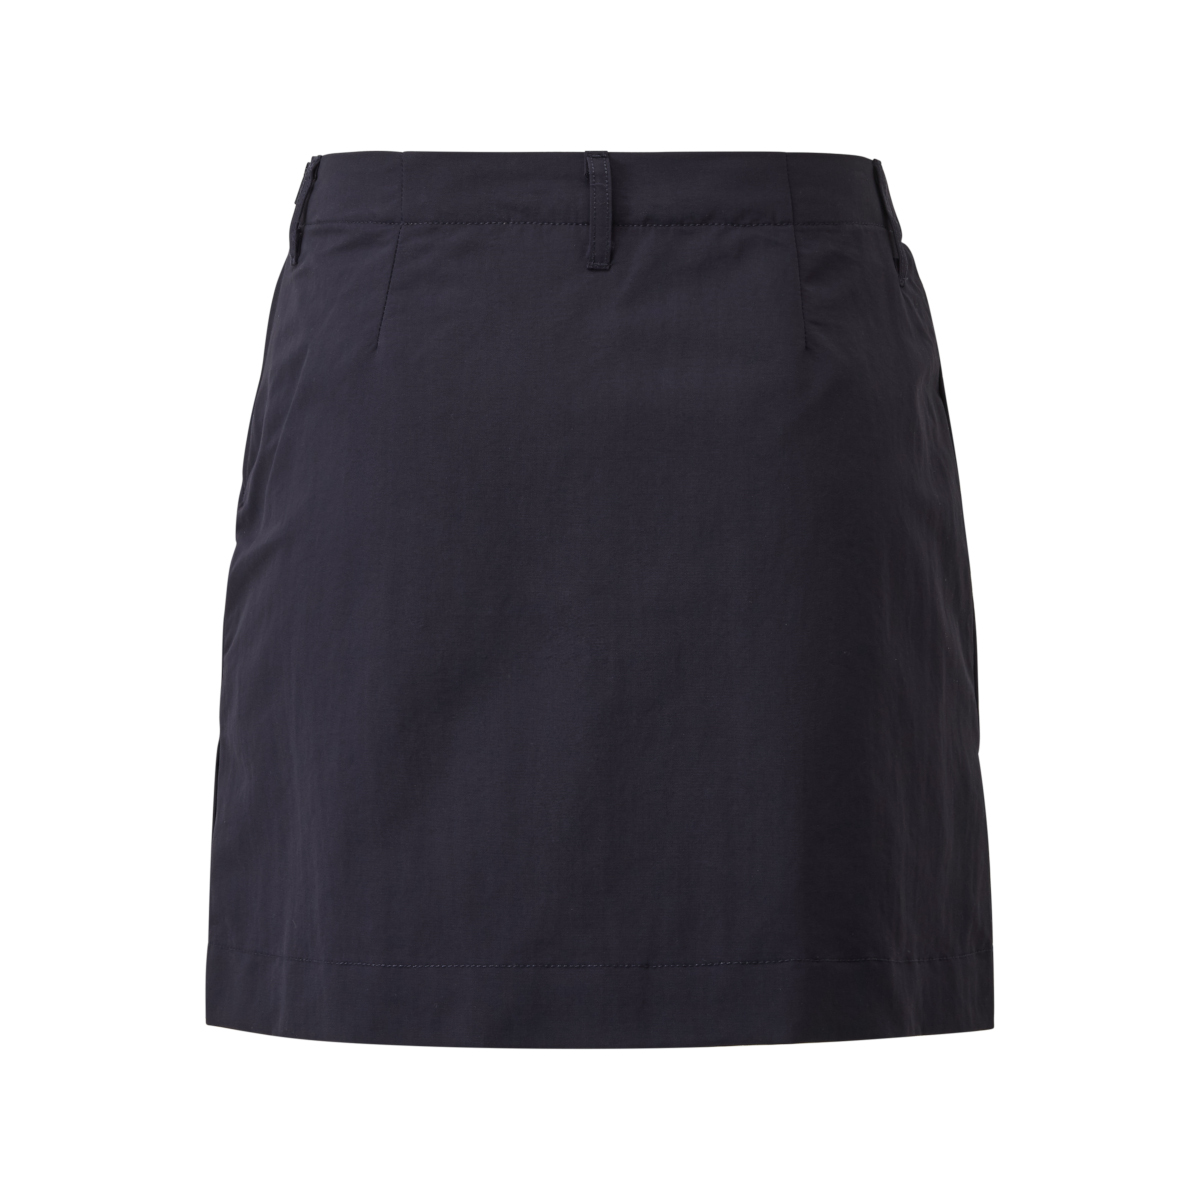 Gill UV Tec jupe-short, femme - bleu marine, taille 16